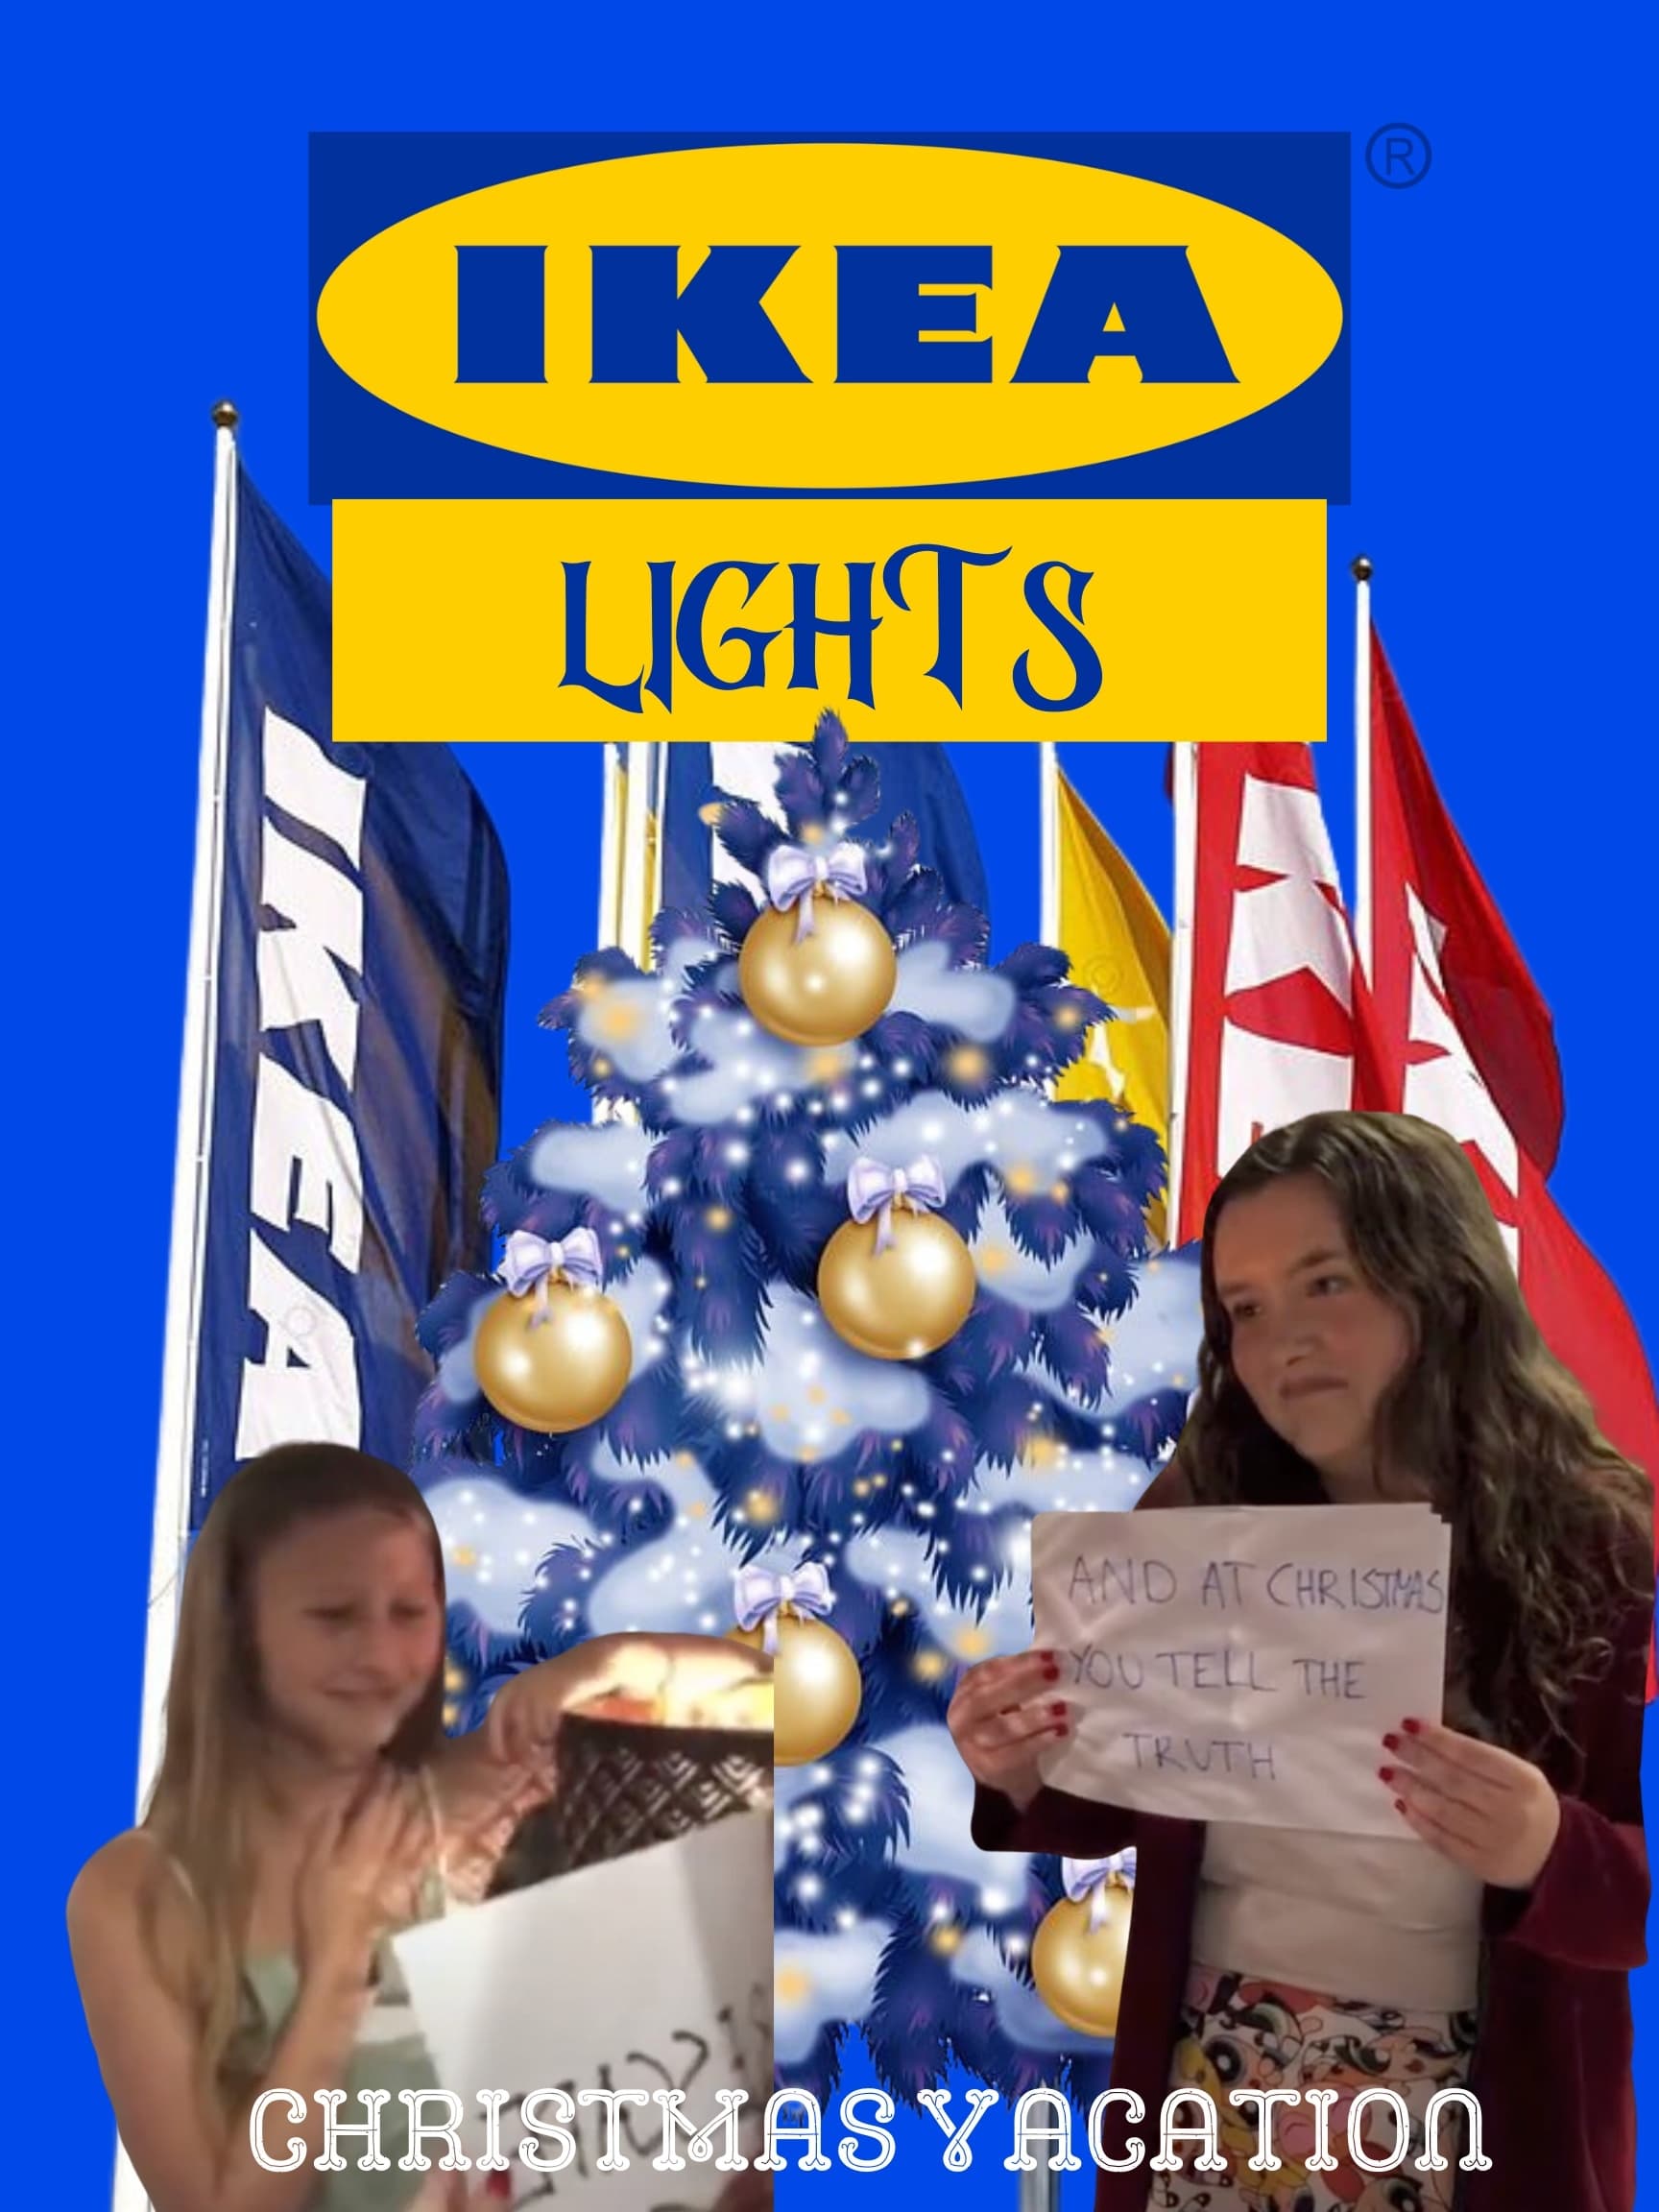 IKEA Lights - The Next Generation (Christmas Vacation)